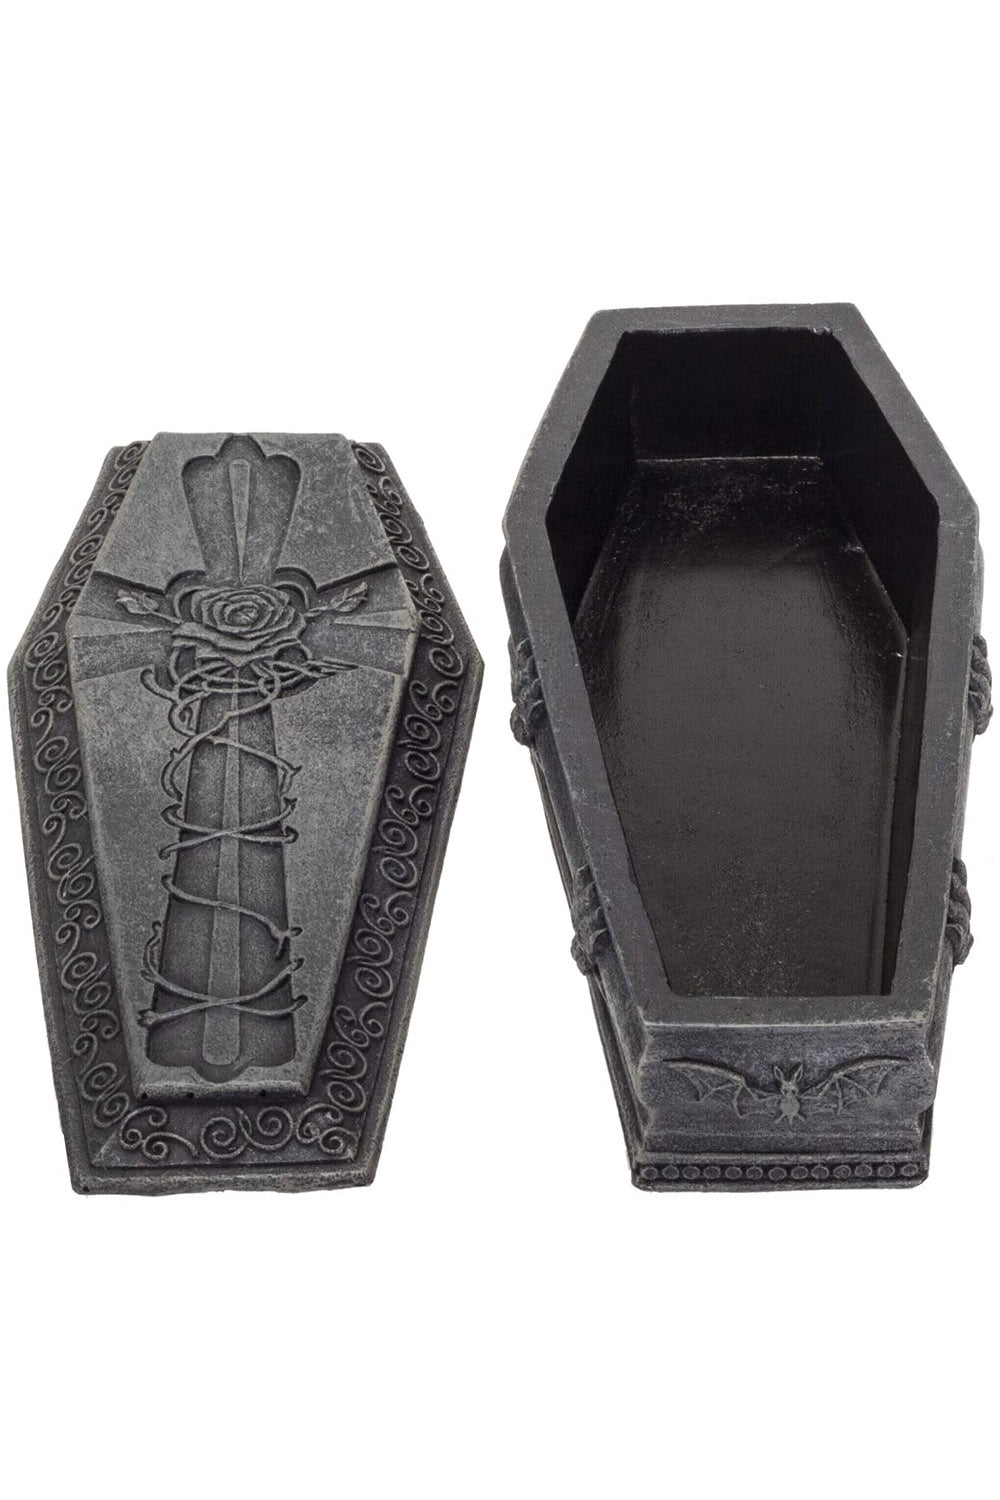 Gargoyle Coffin Box